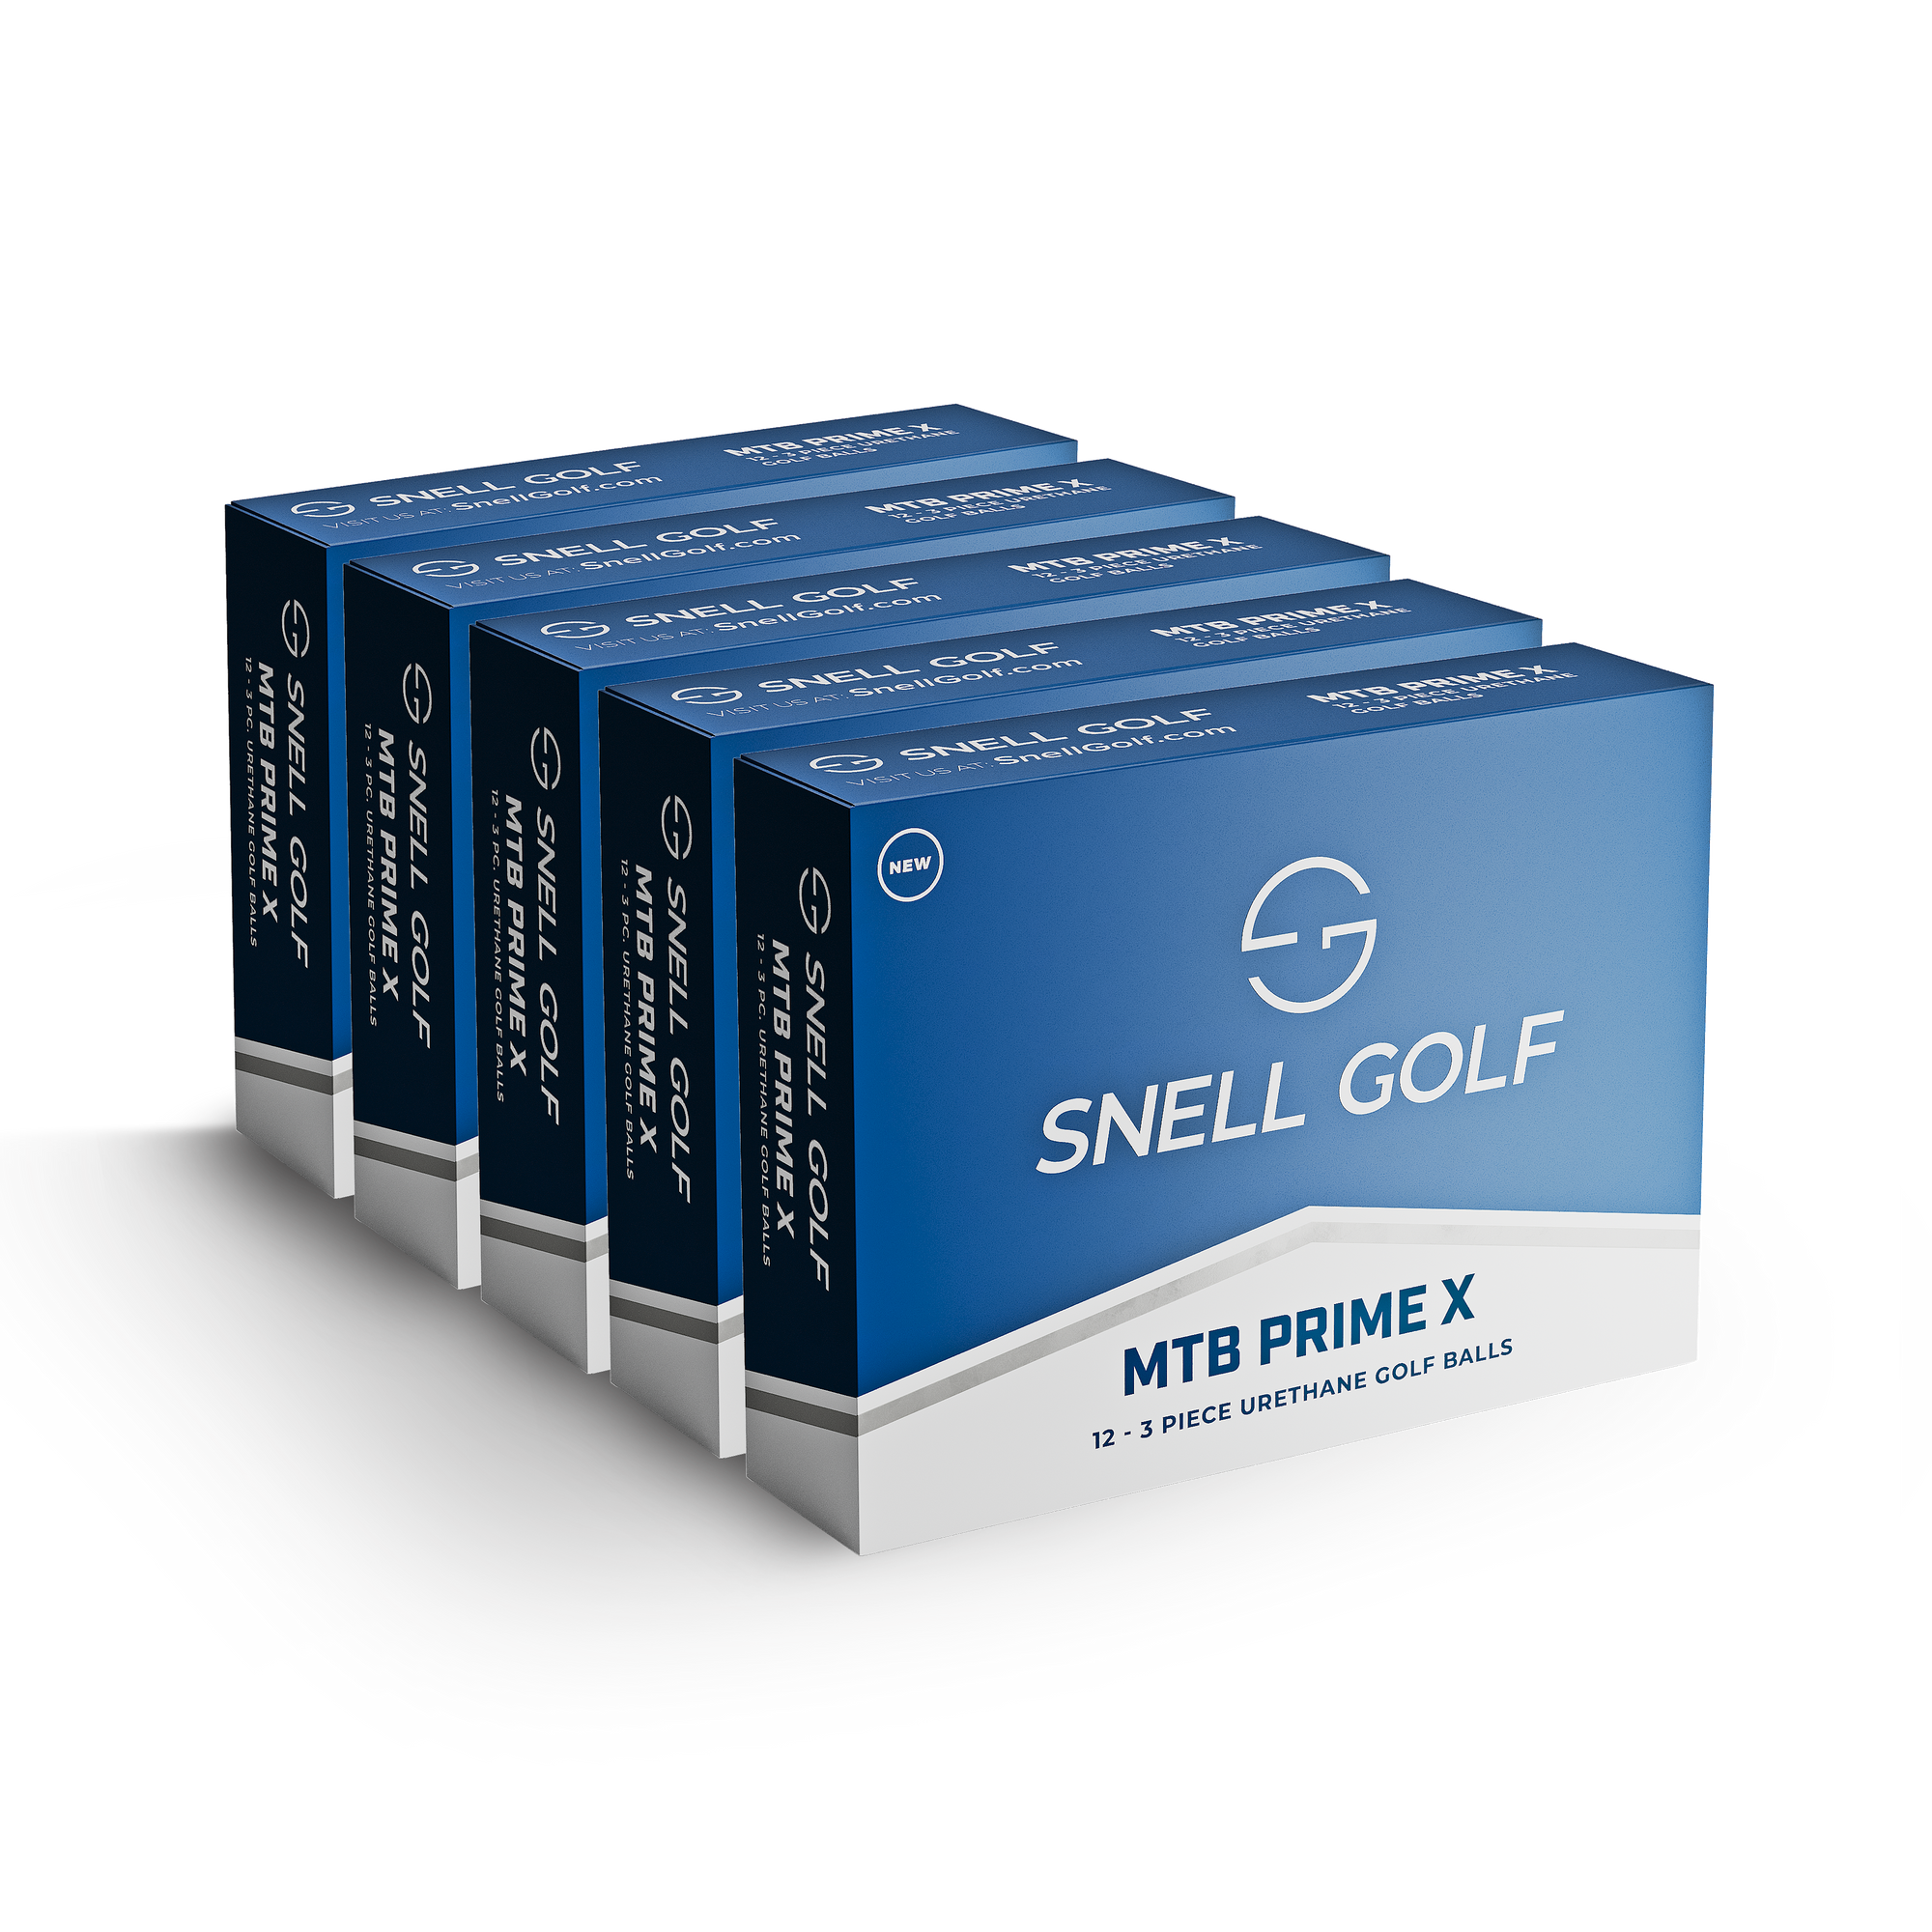 2023 MTB PRIME X Value Pack (5 dz.) Golf Ball Snell Golf   